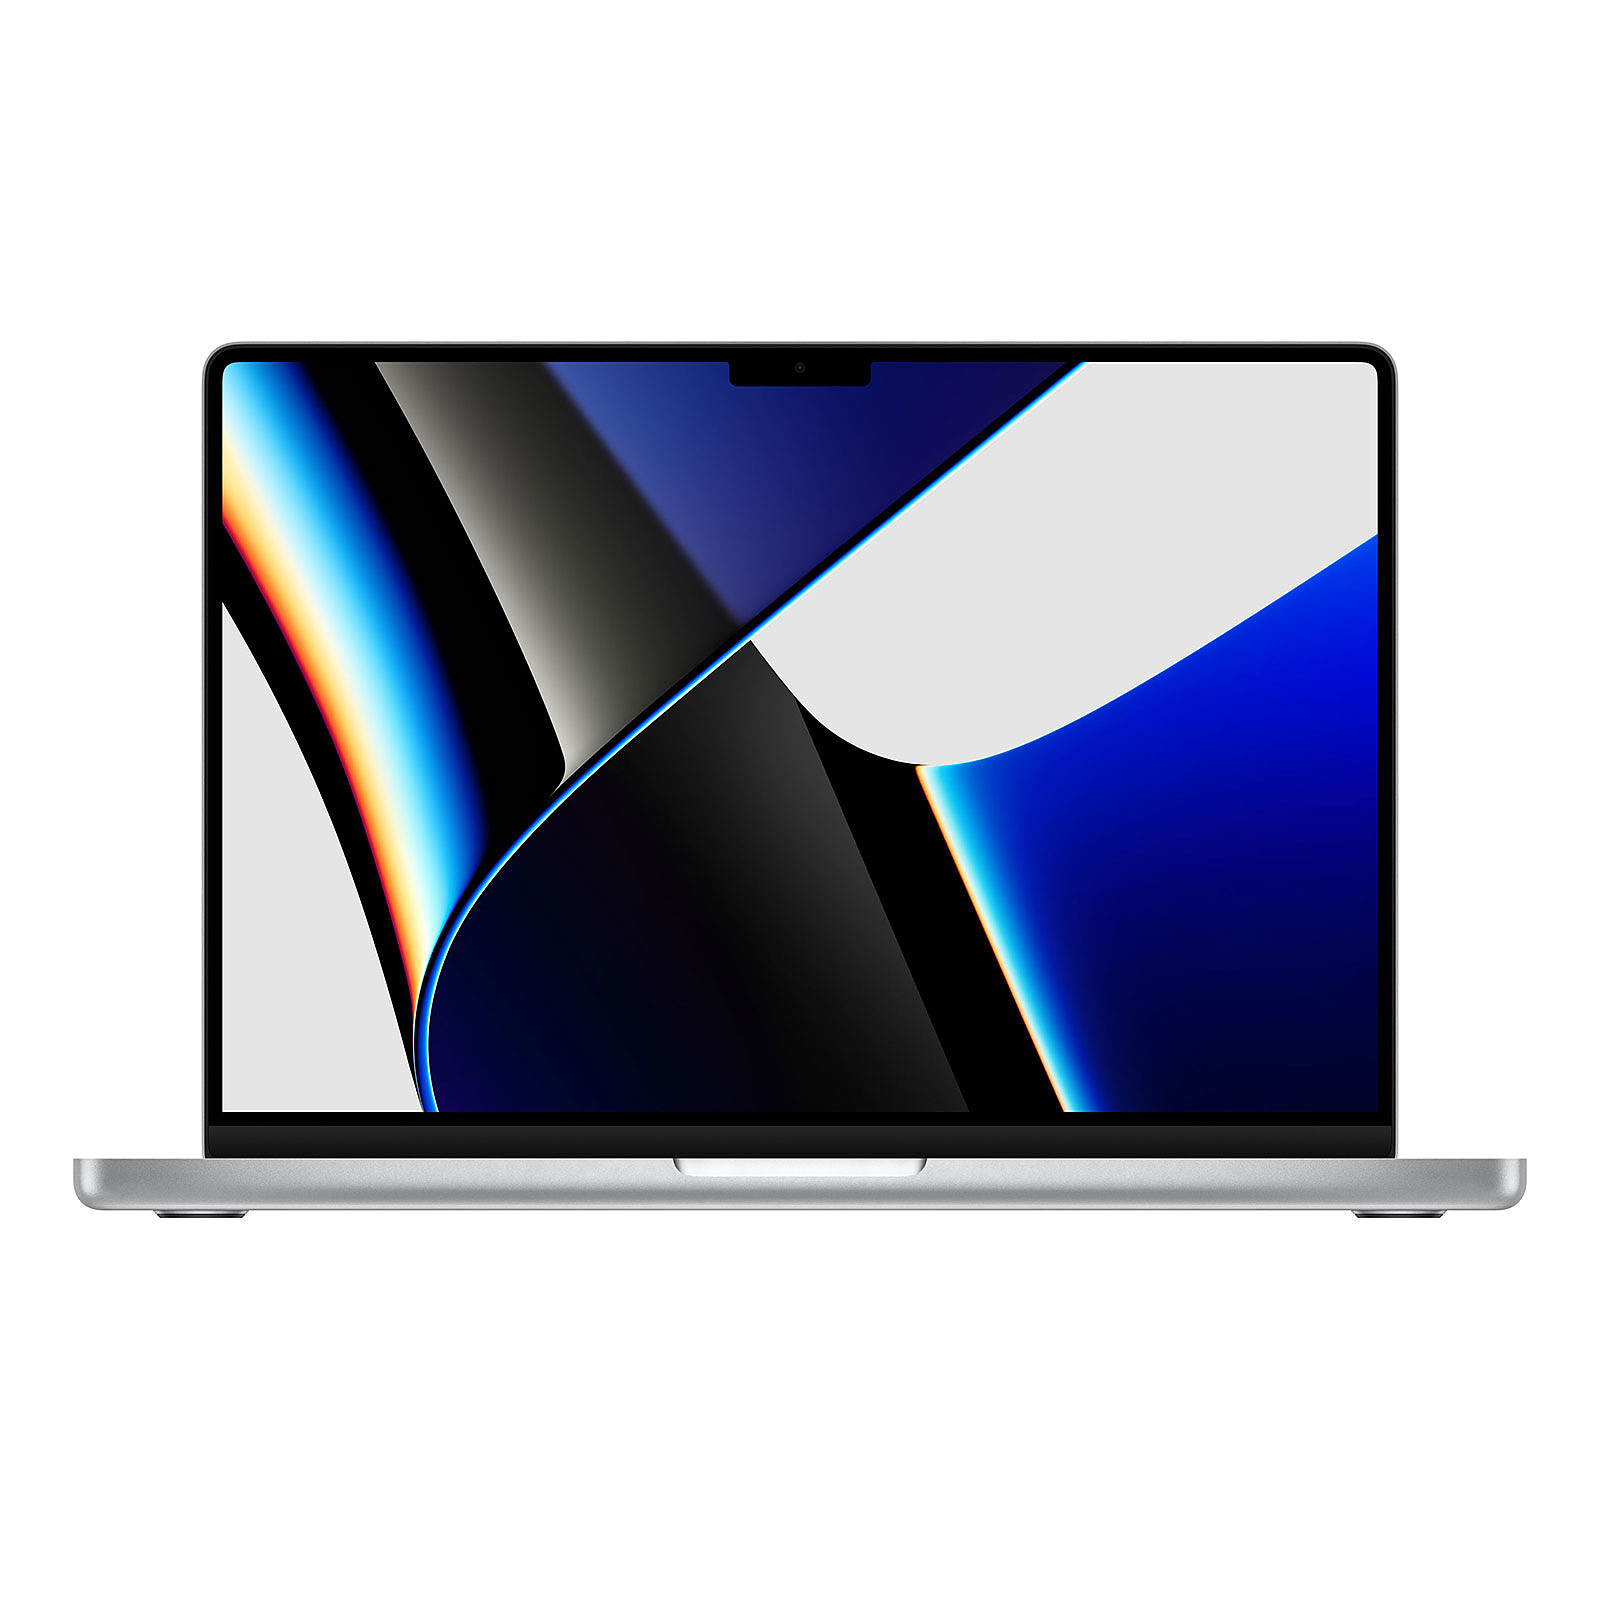 Bollestore Plus-APPLE STORE Abidjan - Compatibilité avec l'écran Thunderbolt  Display. Incluant les générations actuelles de MacBook Air, MacBook Pro,  Mac mini, Mac Pro et iMac, les Mac disposant de Thunderbolt sont entièrement